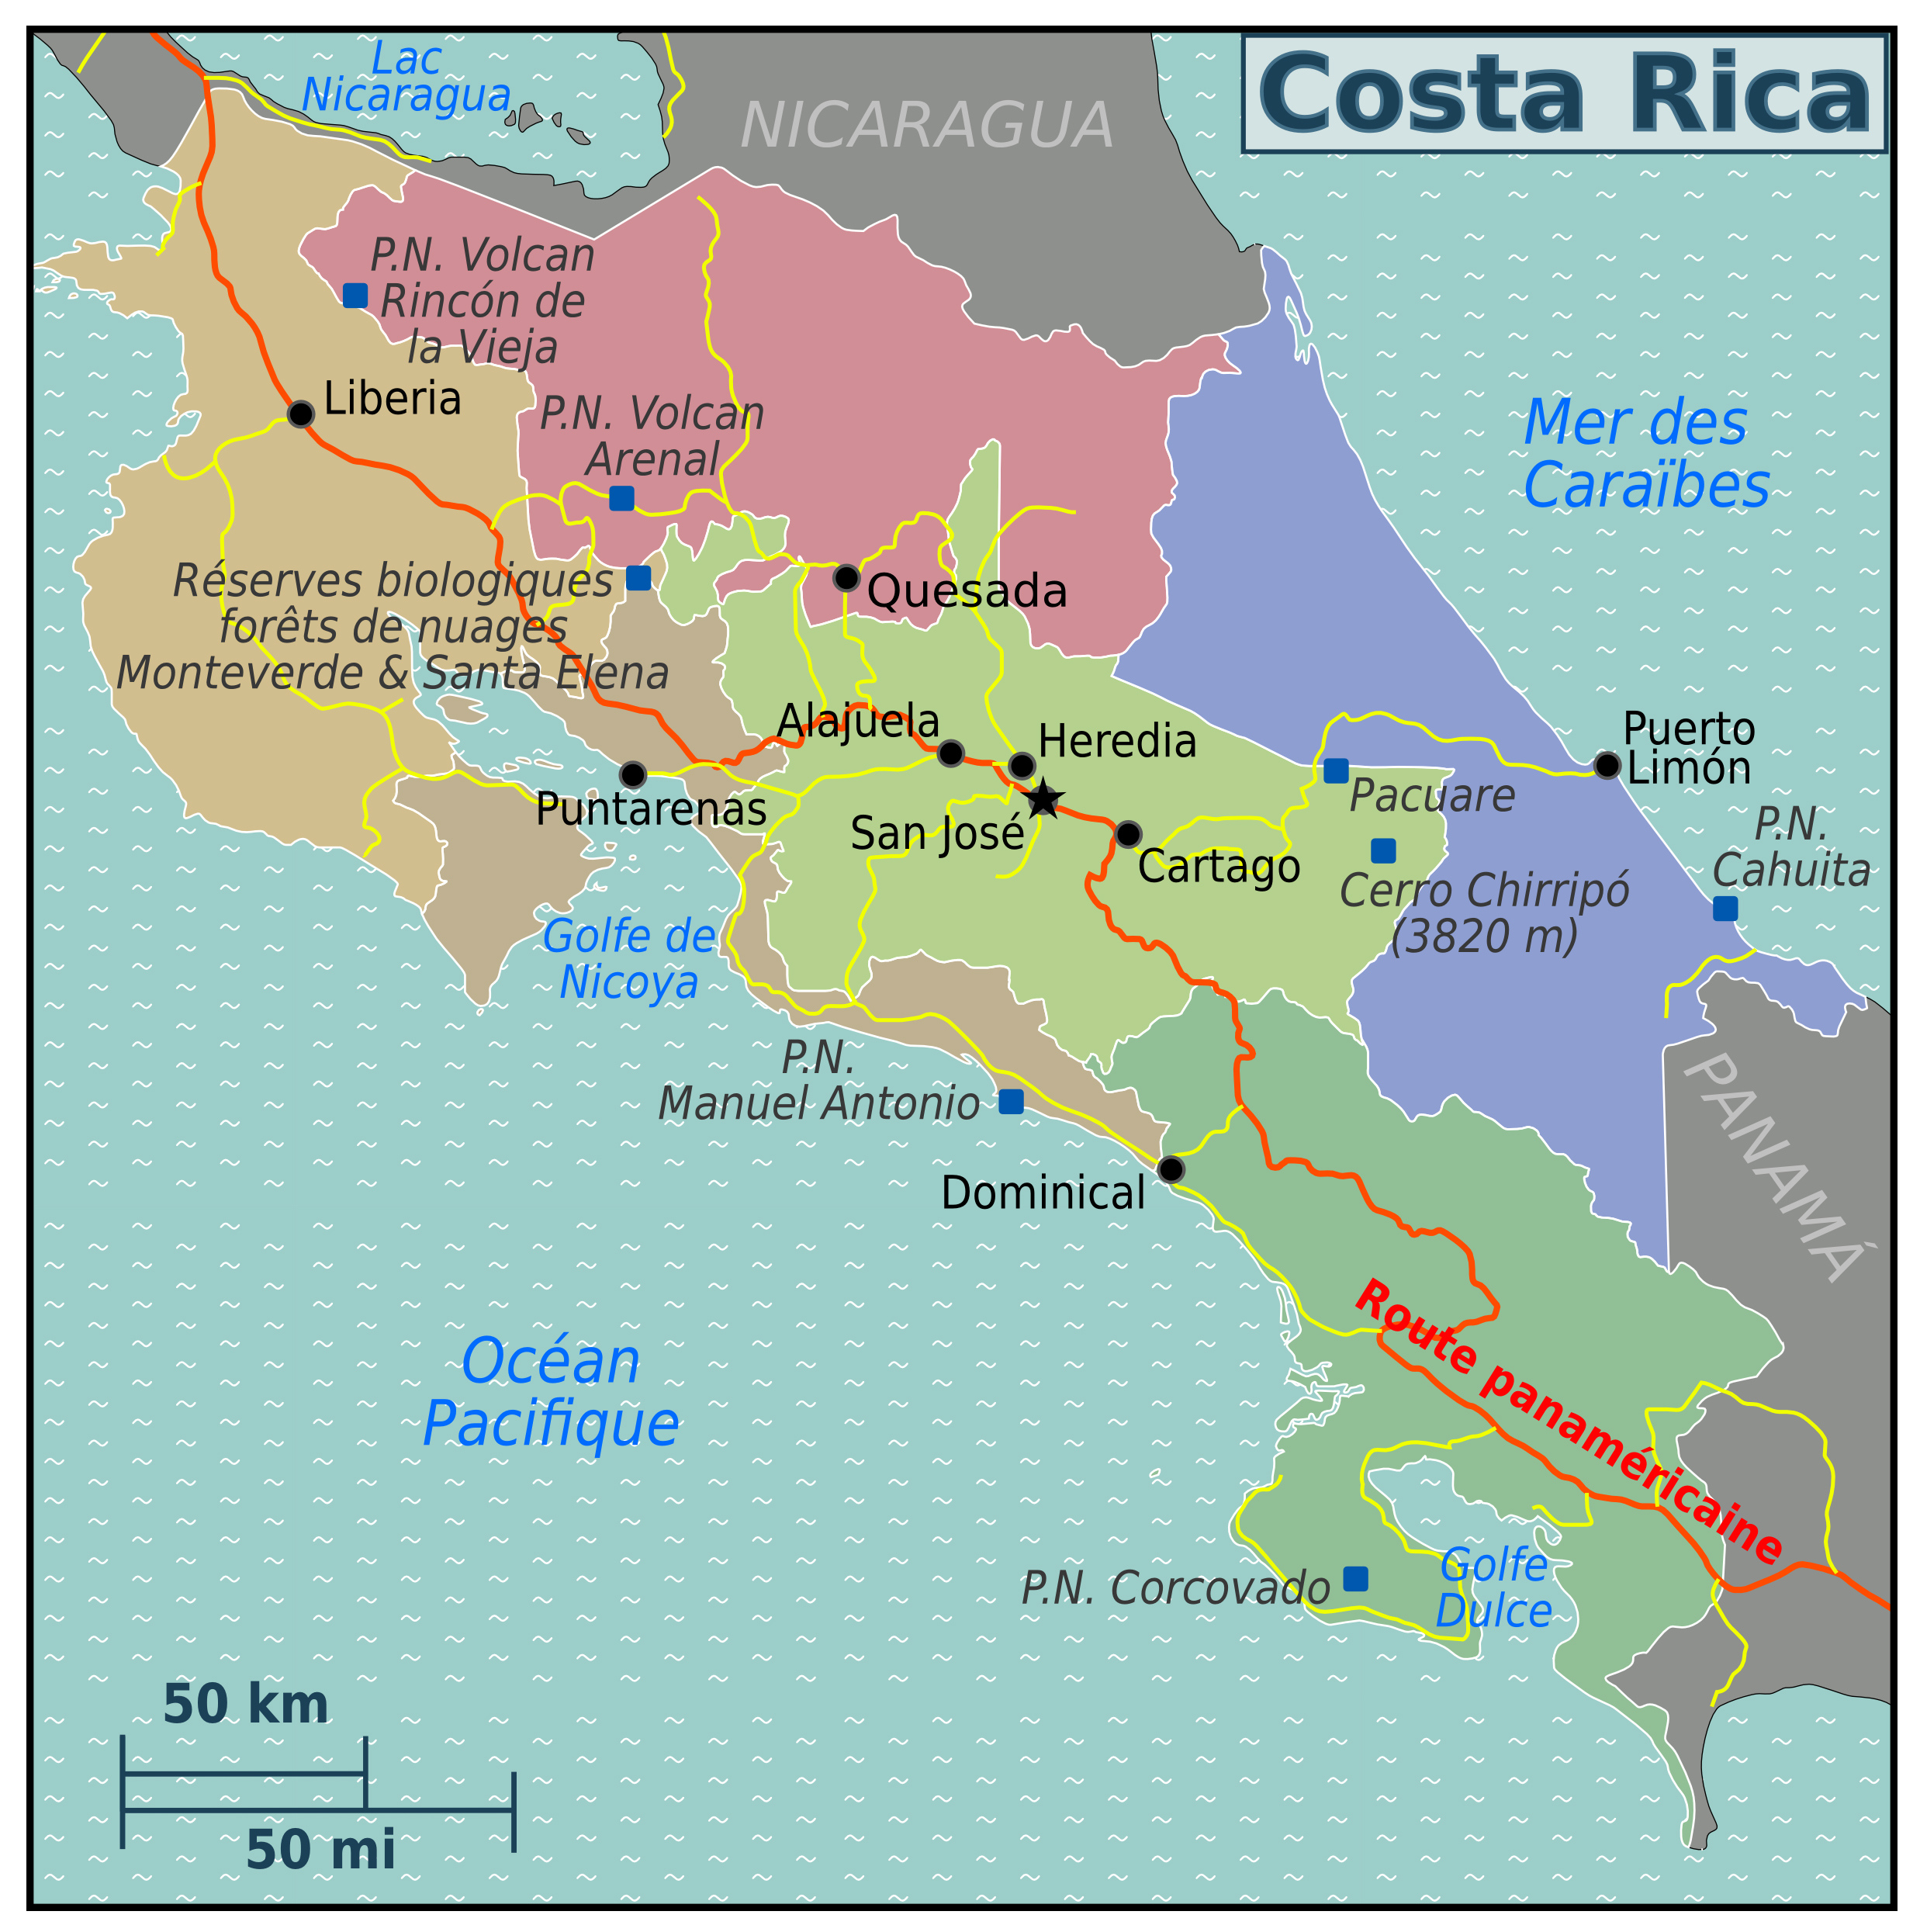 Large Regions Map Of Costa Rica Costa Rica Large Regions Map Vidiani 